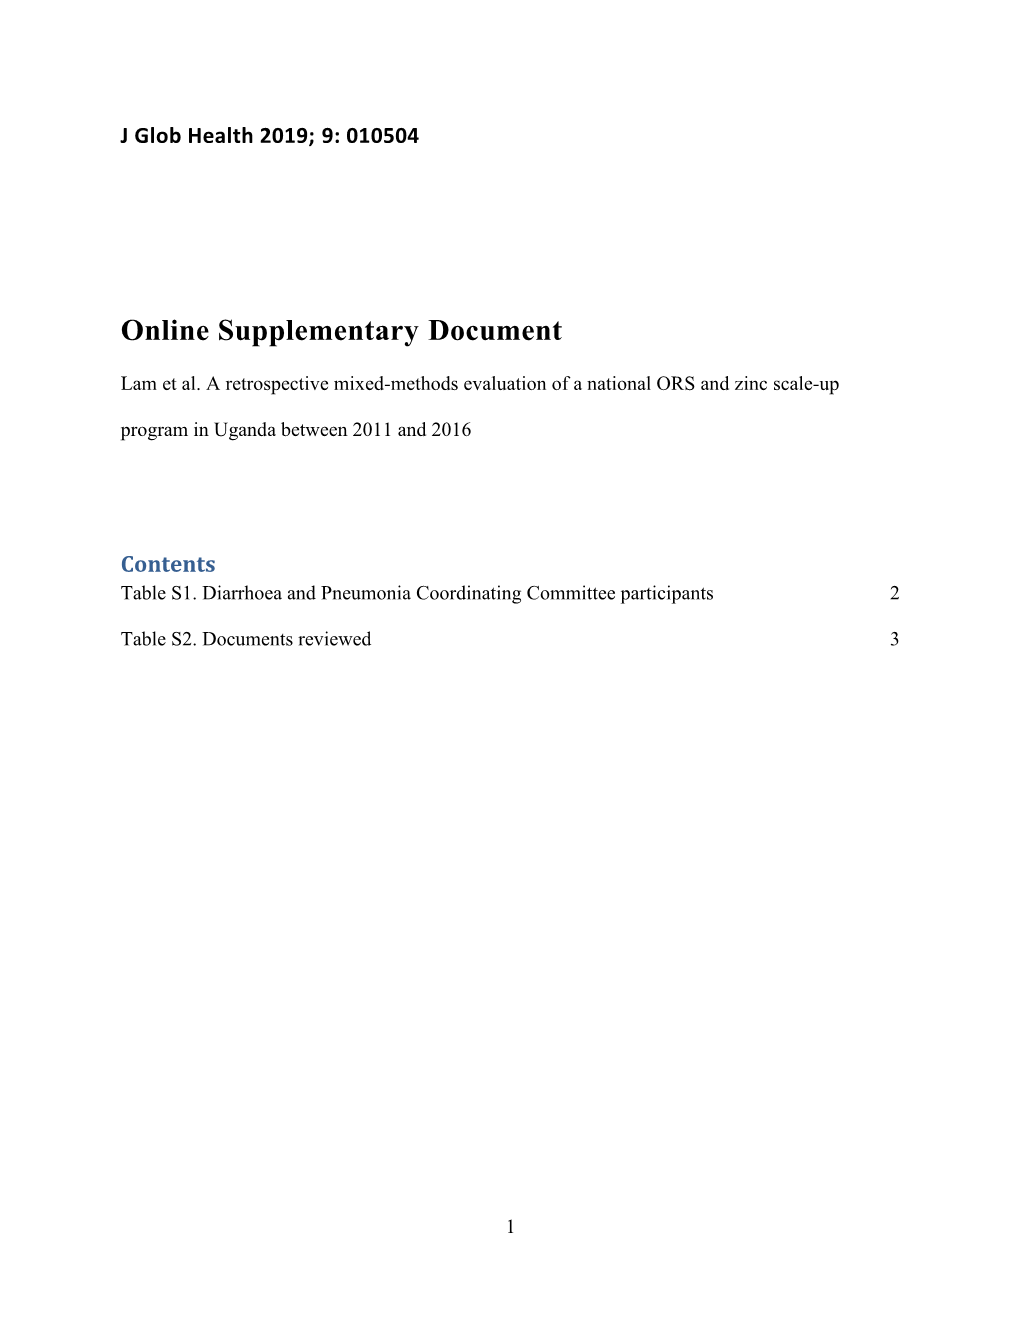 Online Supplementary Document